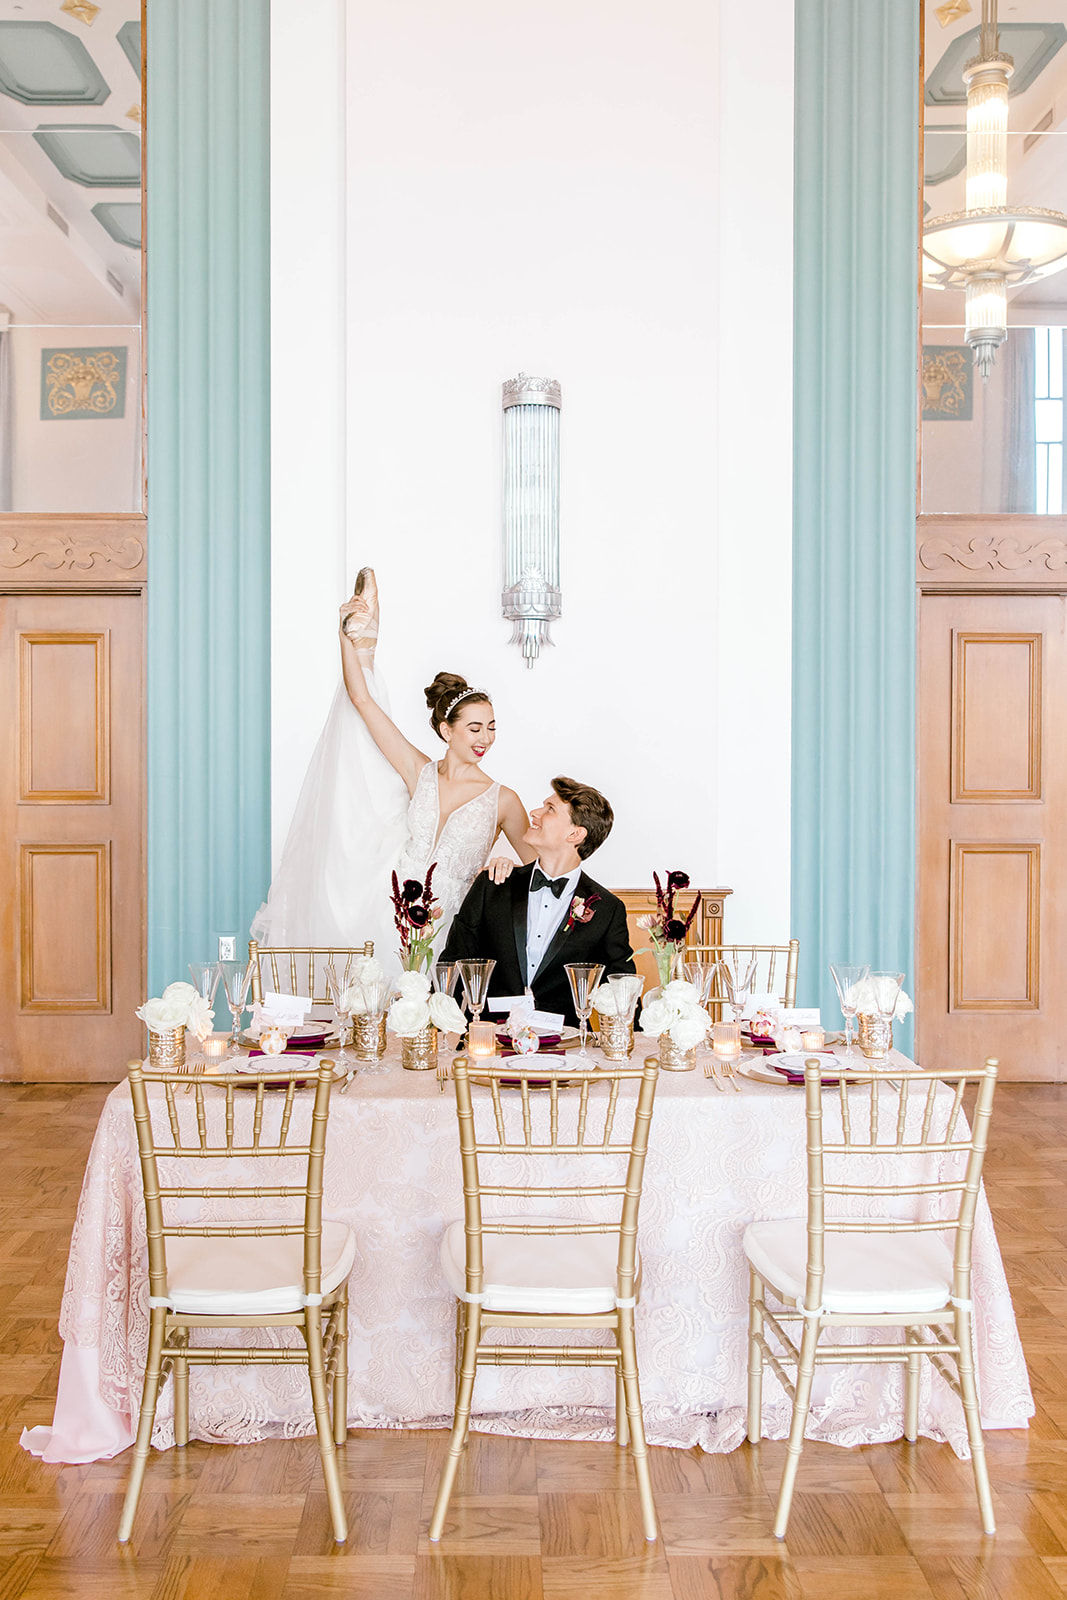 Ballerina bride and groom in nutcracker inspired fine art editorial